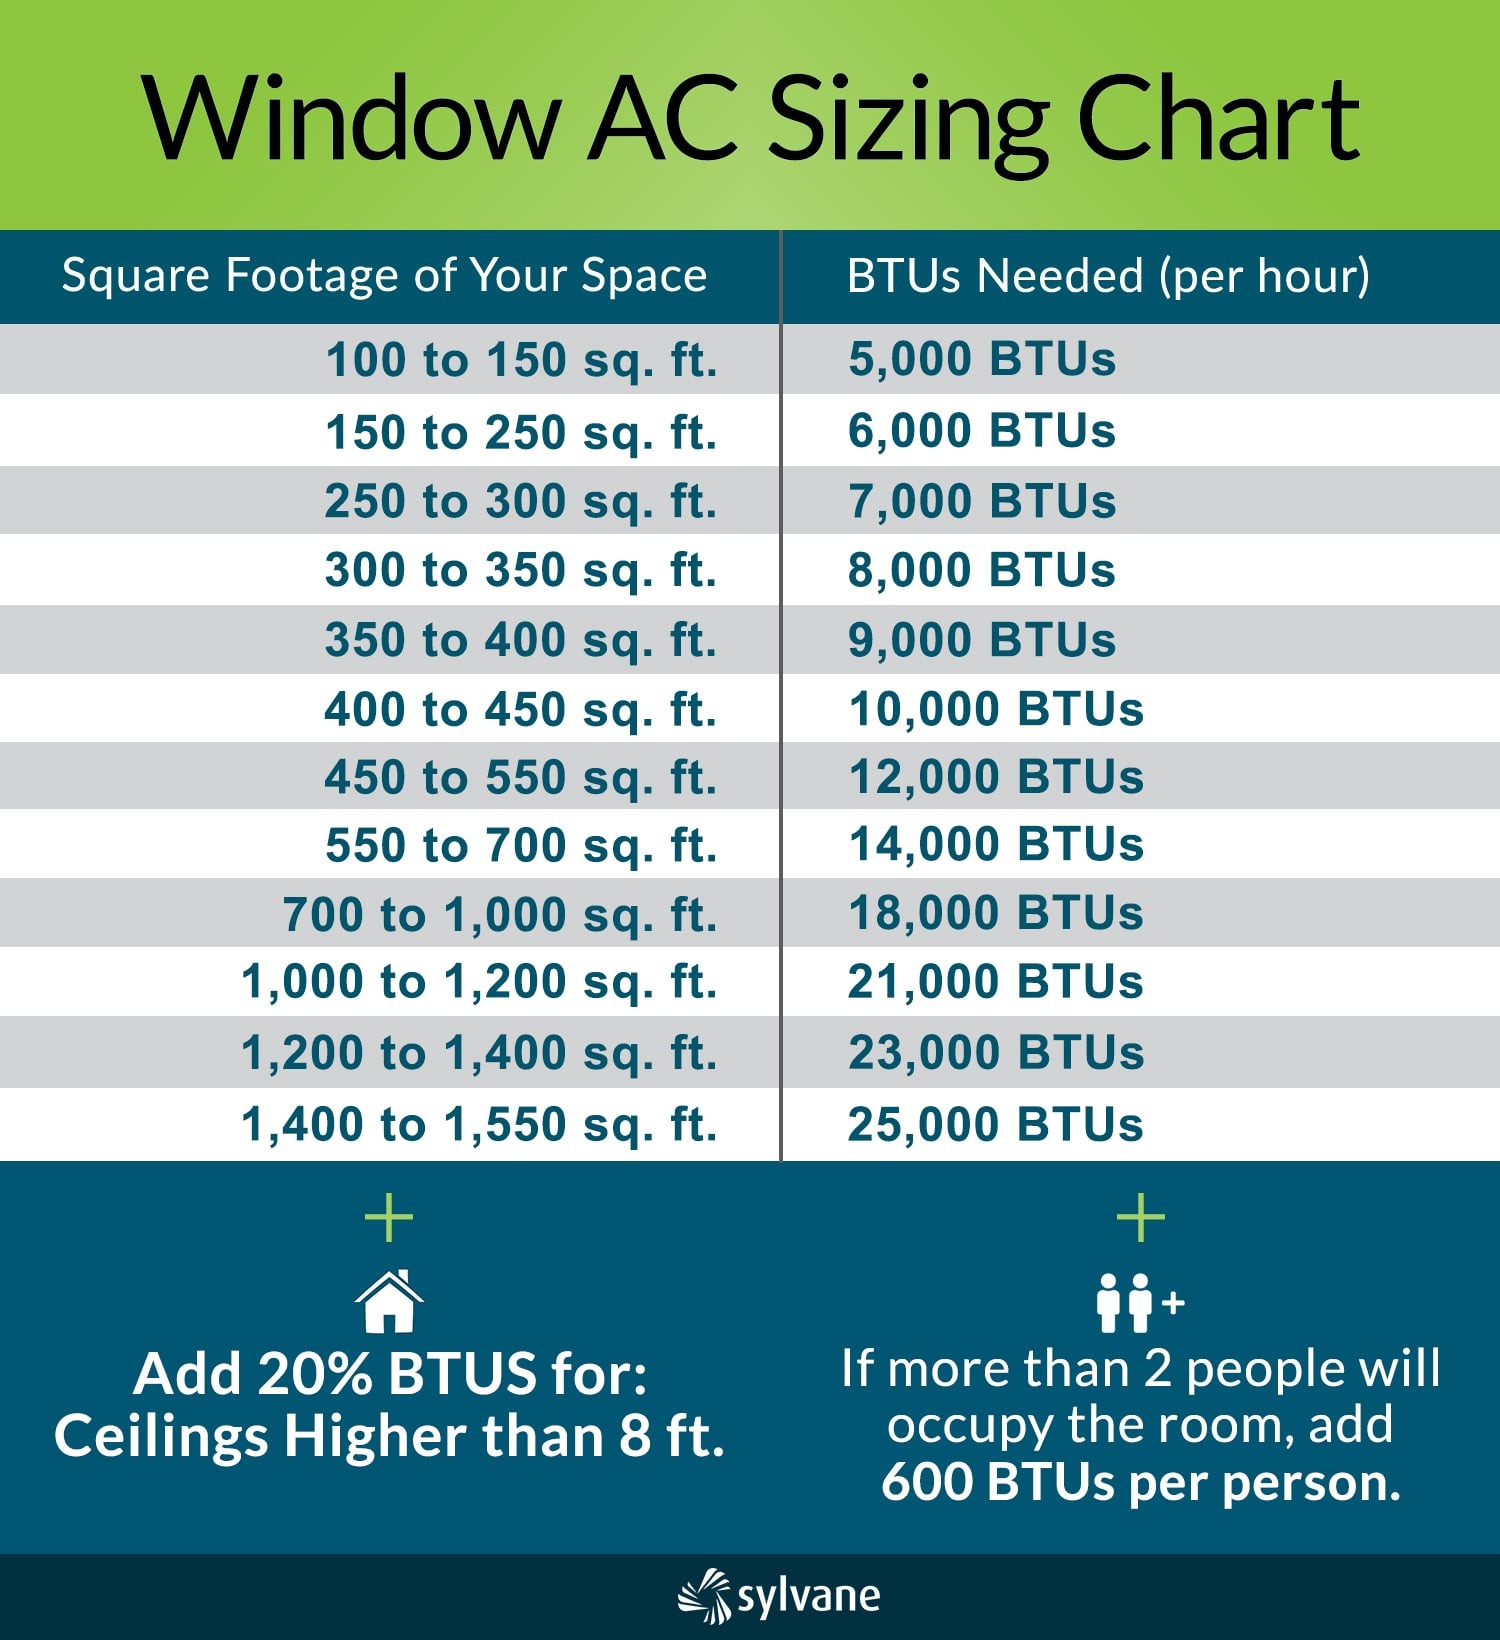 air-conditioner-btu-per-square-foot-chart-3-ways-to-calculate-btu-per-square-foot-wikihow